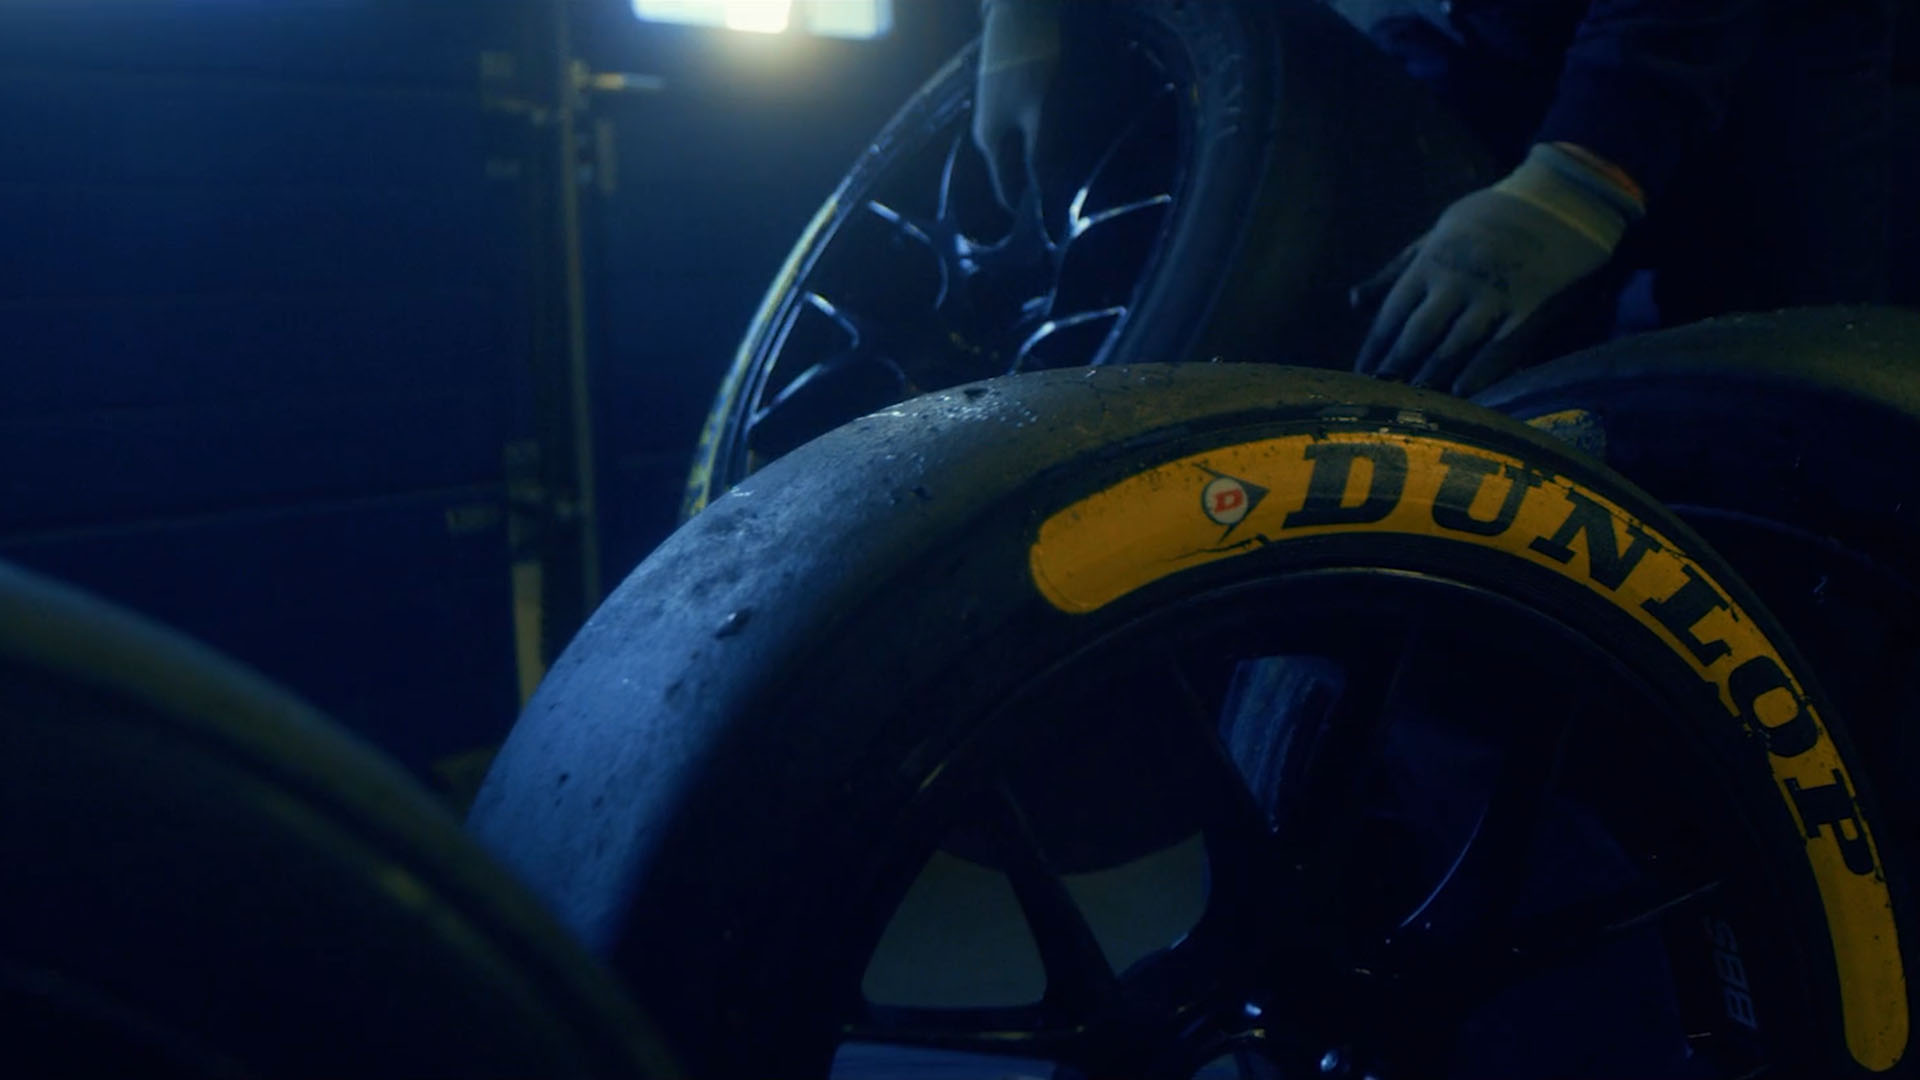 Dunlop-Frauen-im Motorsport-GOODYEAR-Dokumentation-produktfilm